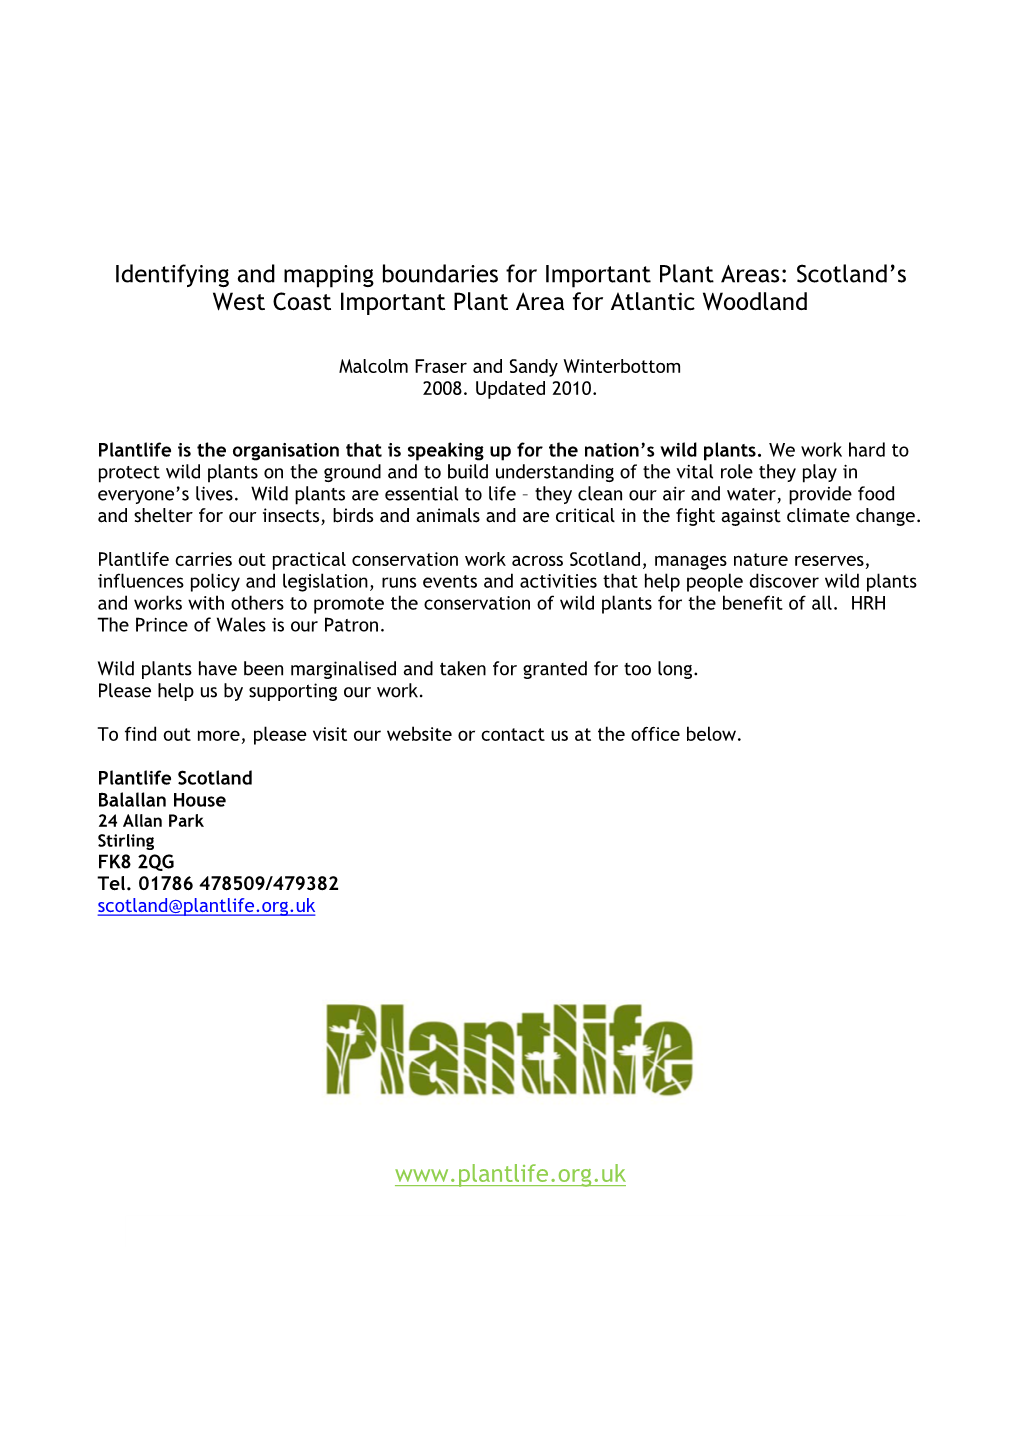 Scotland's West Coast Important Plant Area for Atlantic Woodland